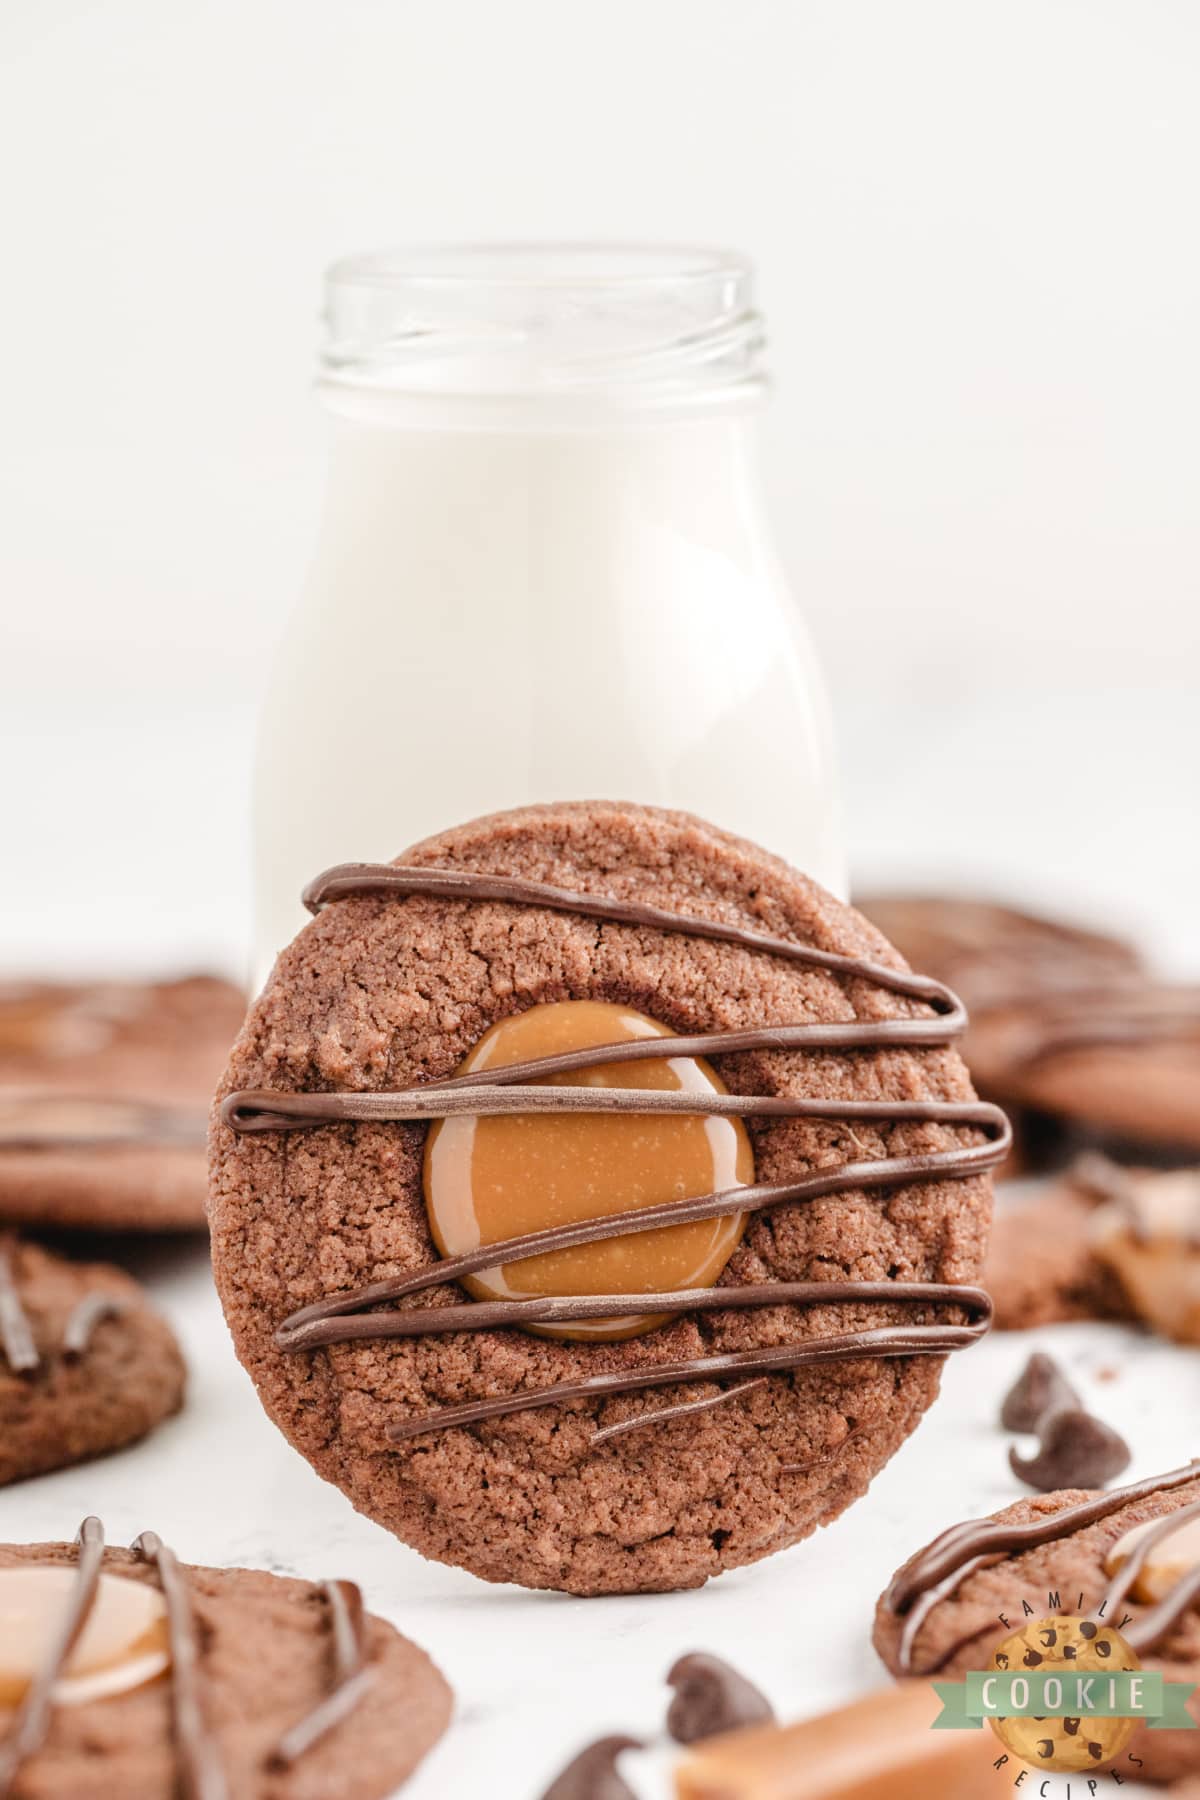 Chocolate caramel cookie recipe.